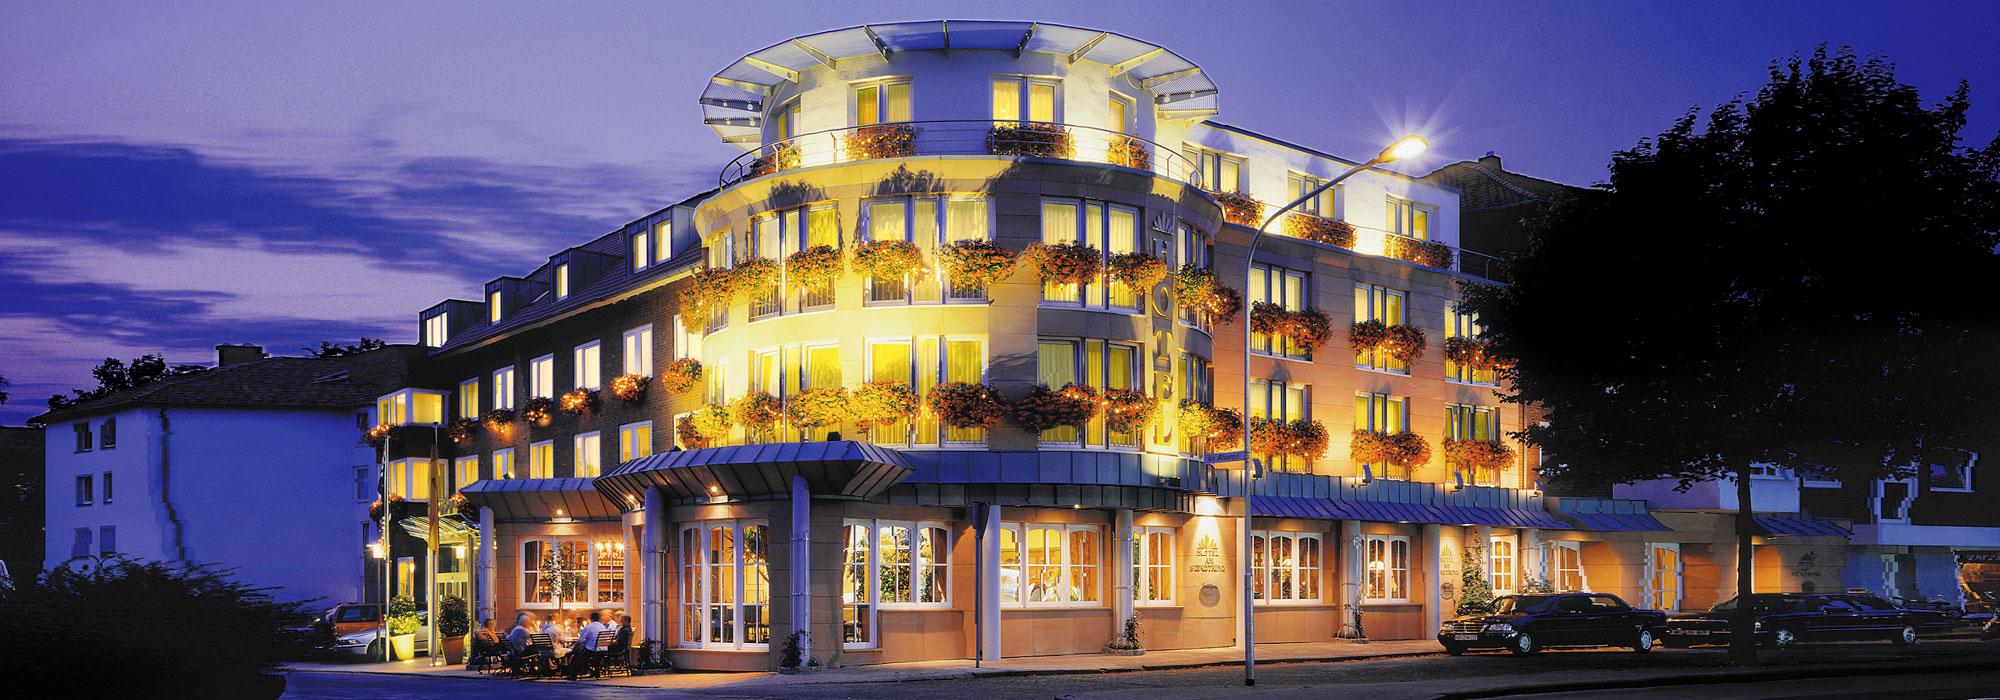 Hotel am Stadtring Nordhorn